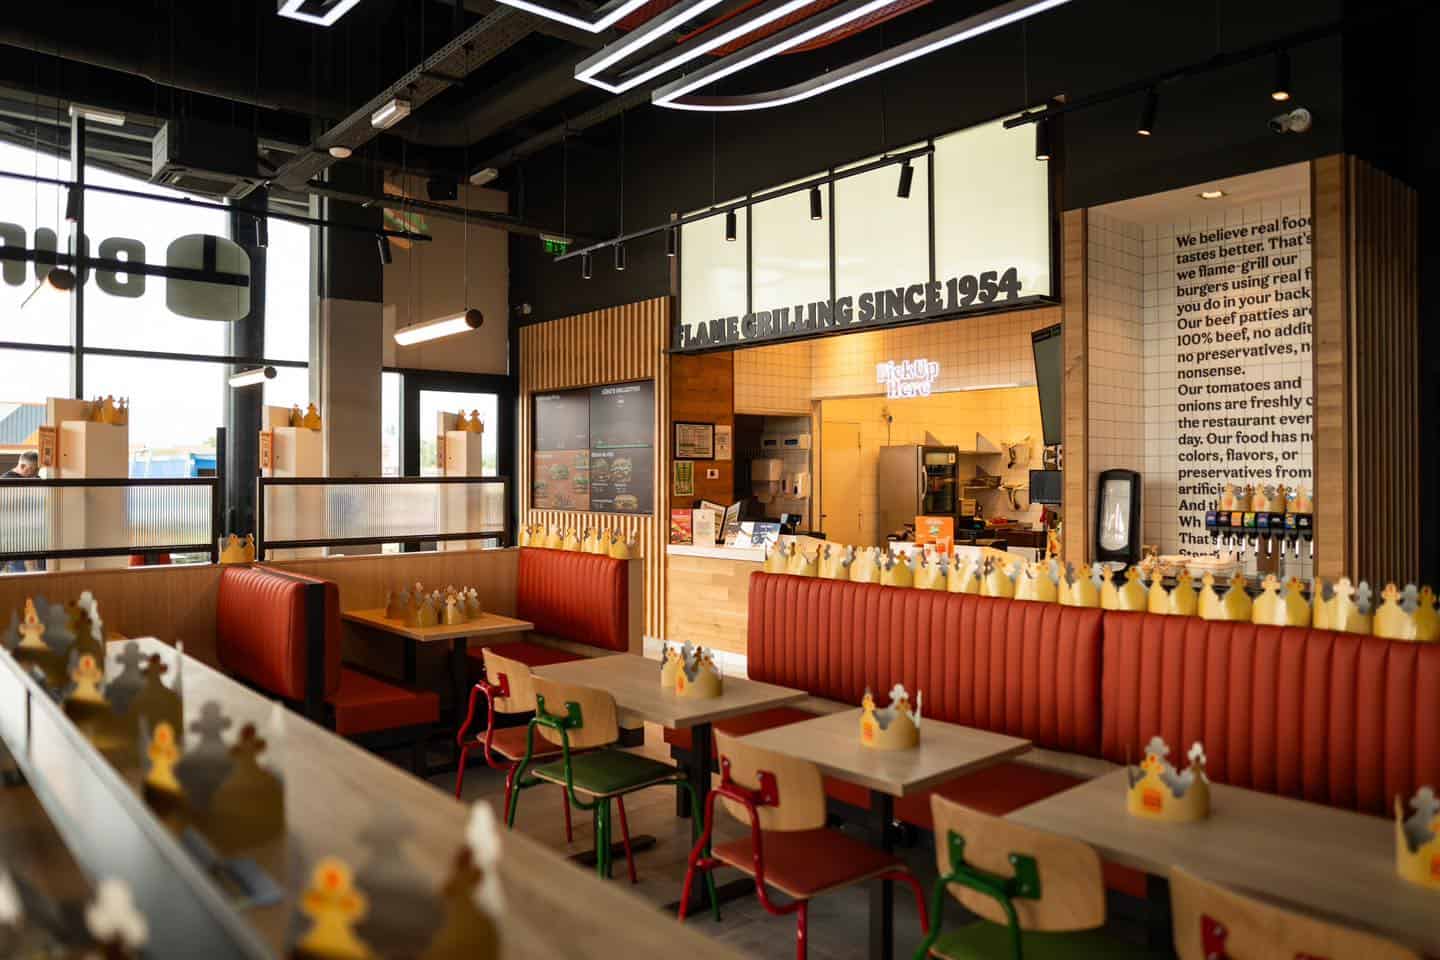 s-a deschis al doilea restaurant burger king din sibiu (foto)